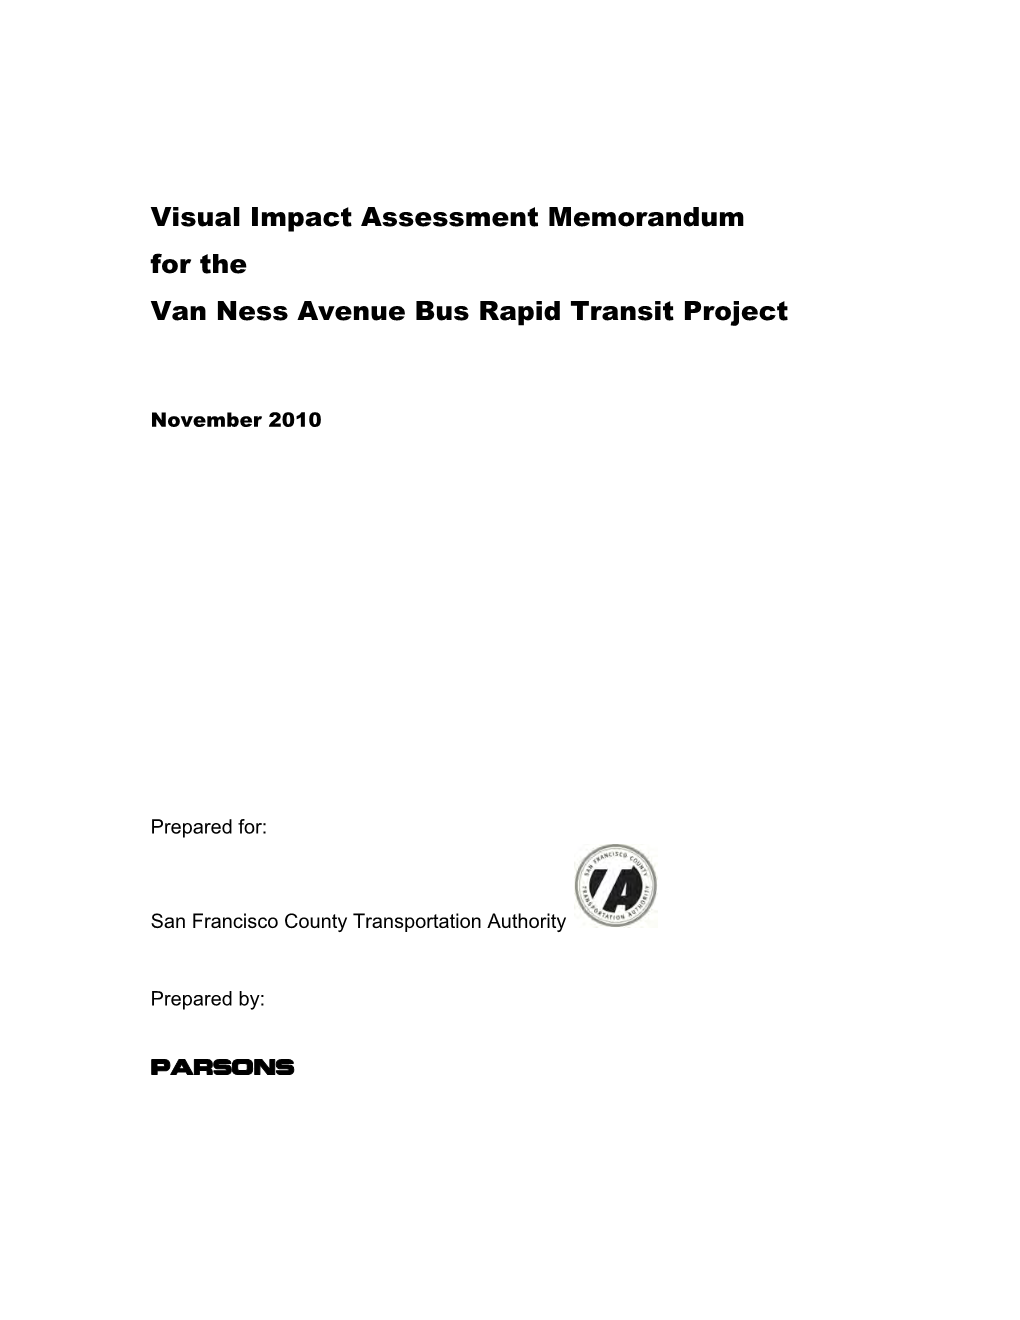 Visual Impact Assessment Memorandum for the Van Ness Avenue Bus Rapid Transit Project